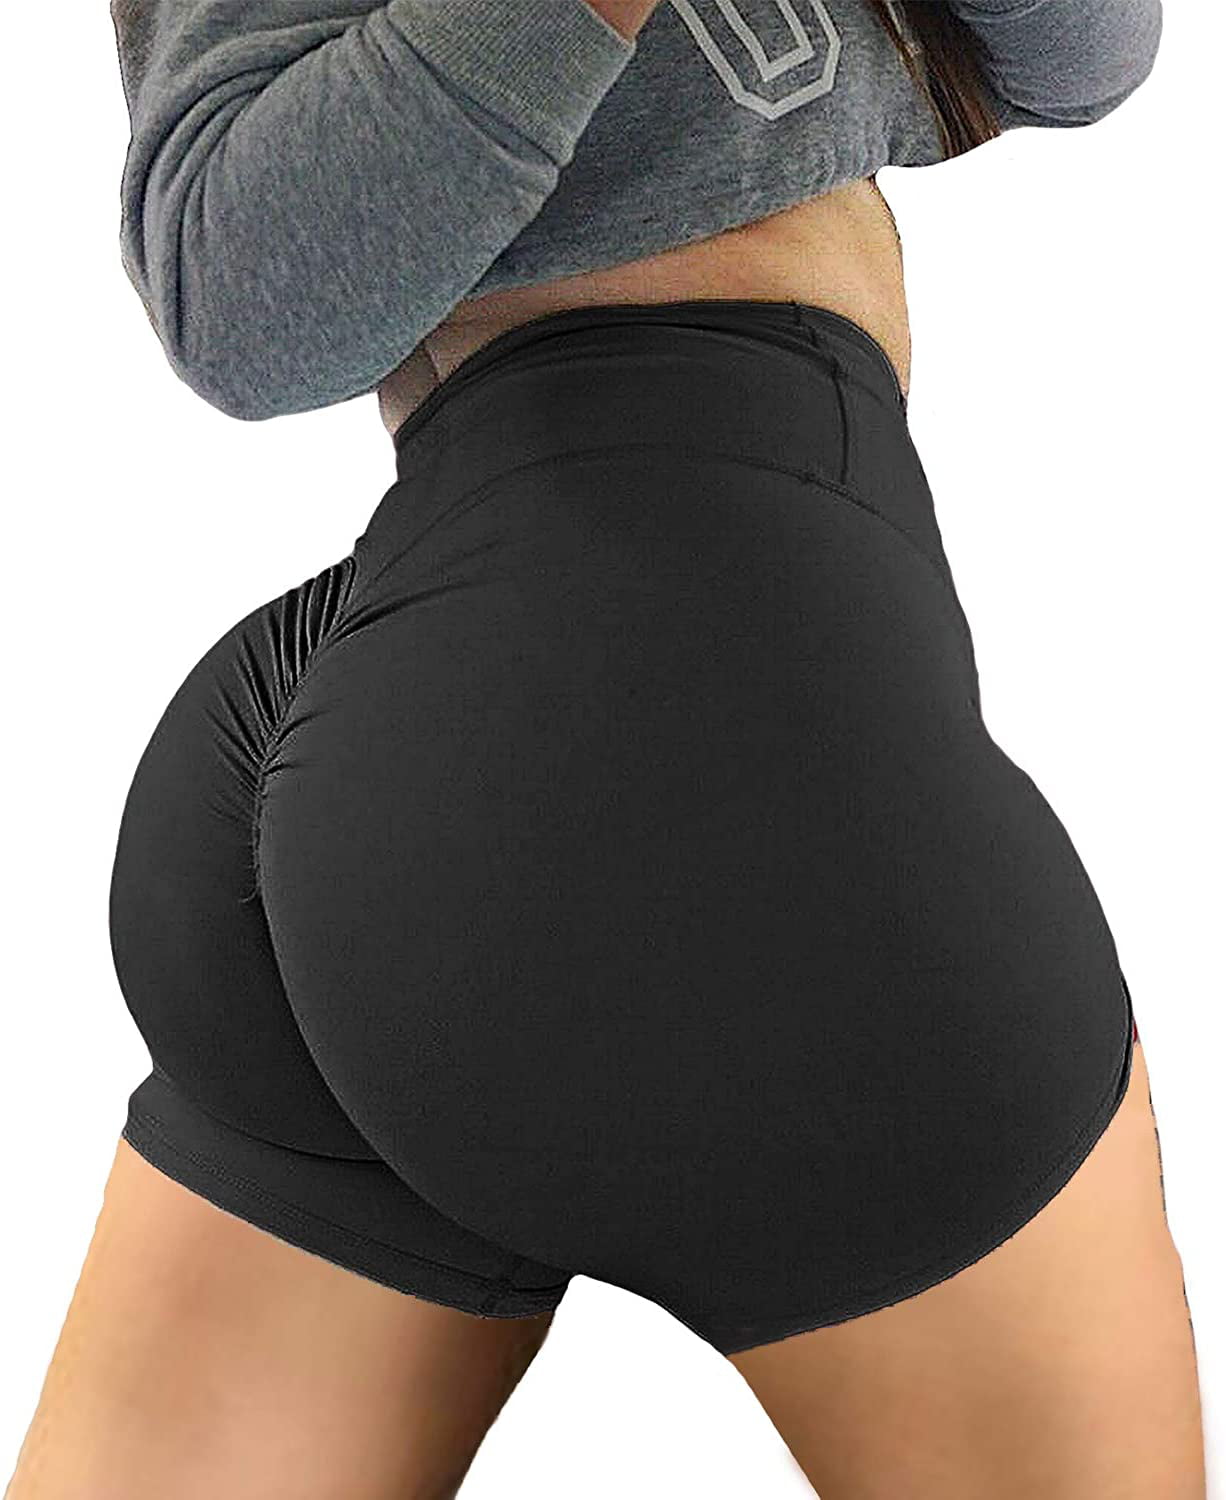 Kiwi Rata Booty Shorts For Women High Waisted Yoga Shorts Sexy Butt Lift Spandex Workout